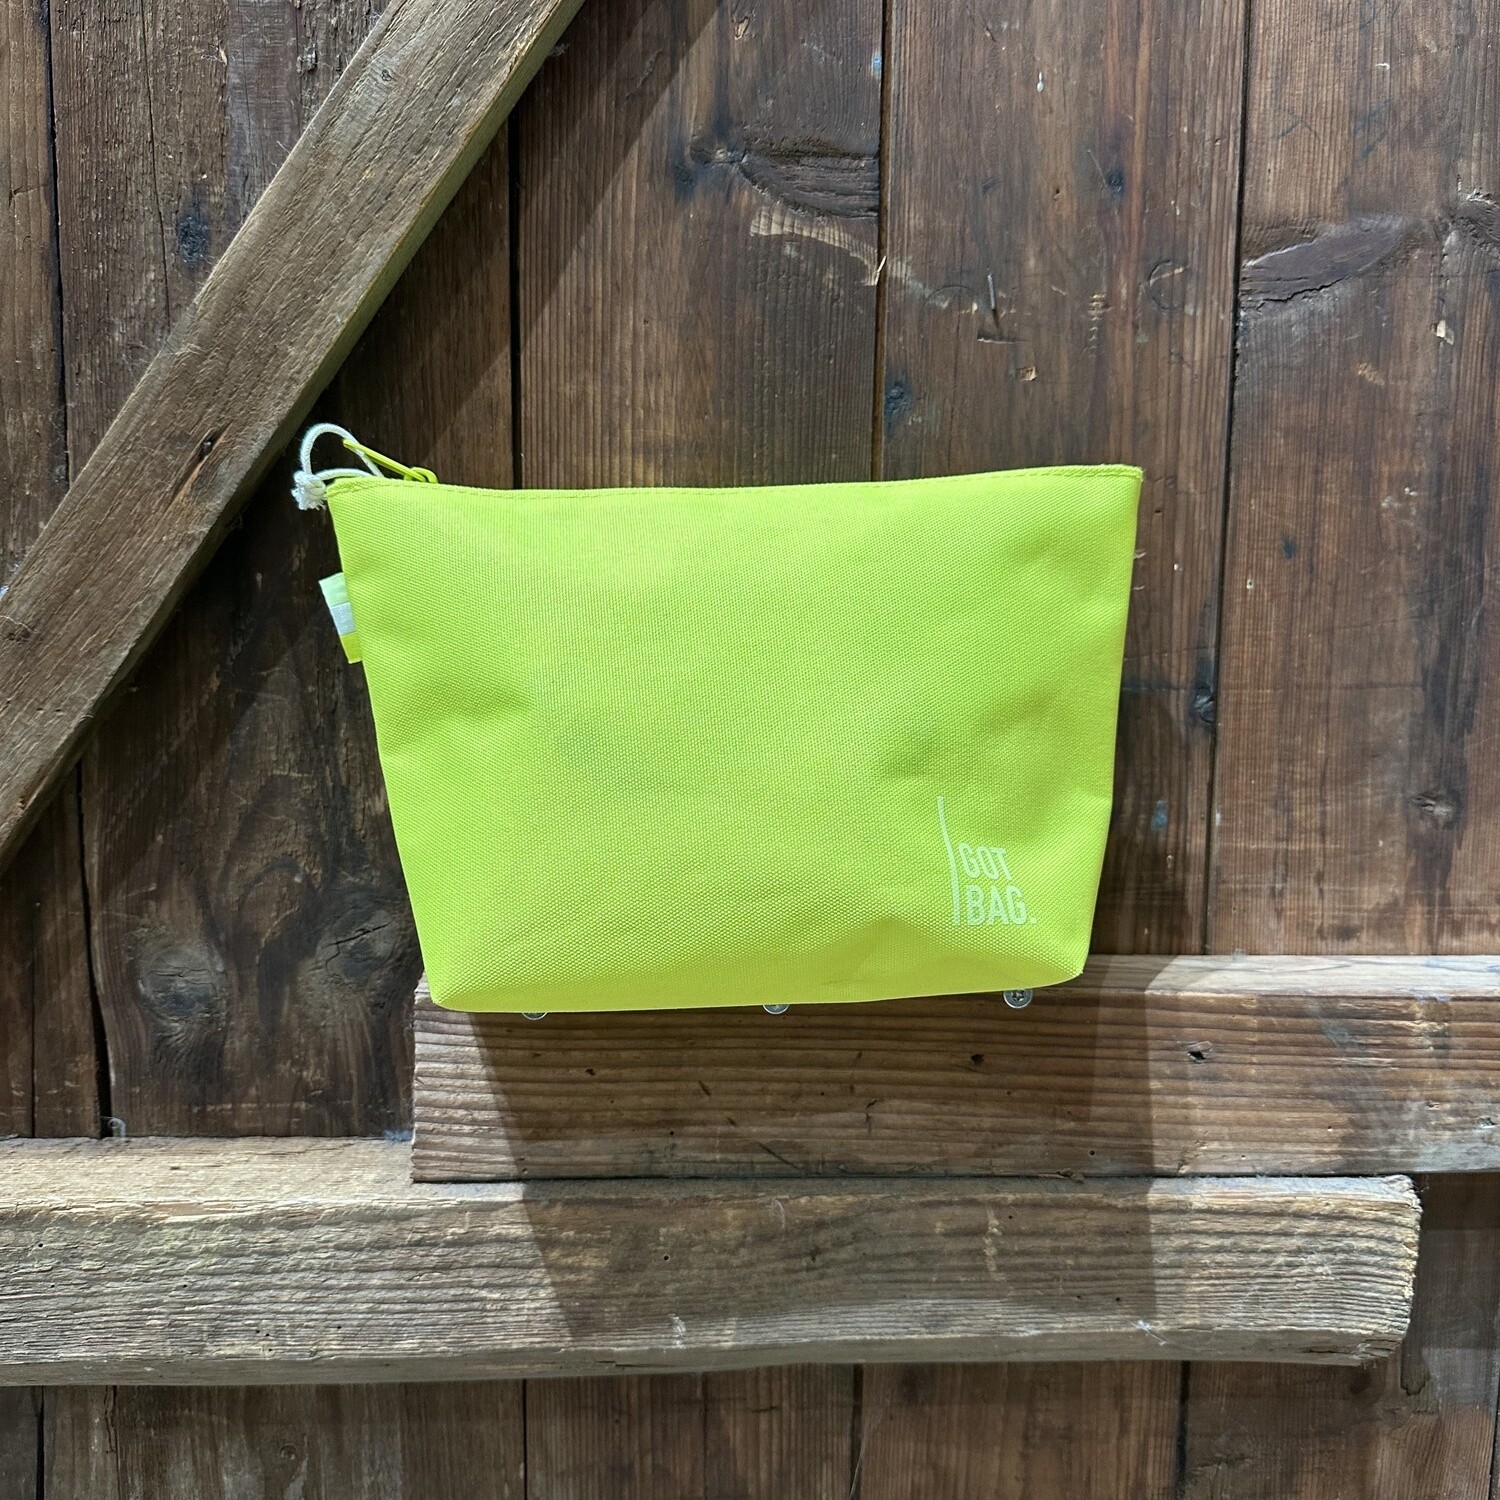 Got Bag — Shower Bag yellow tang monochrome